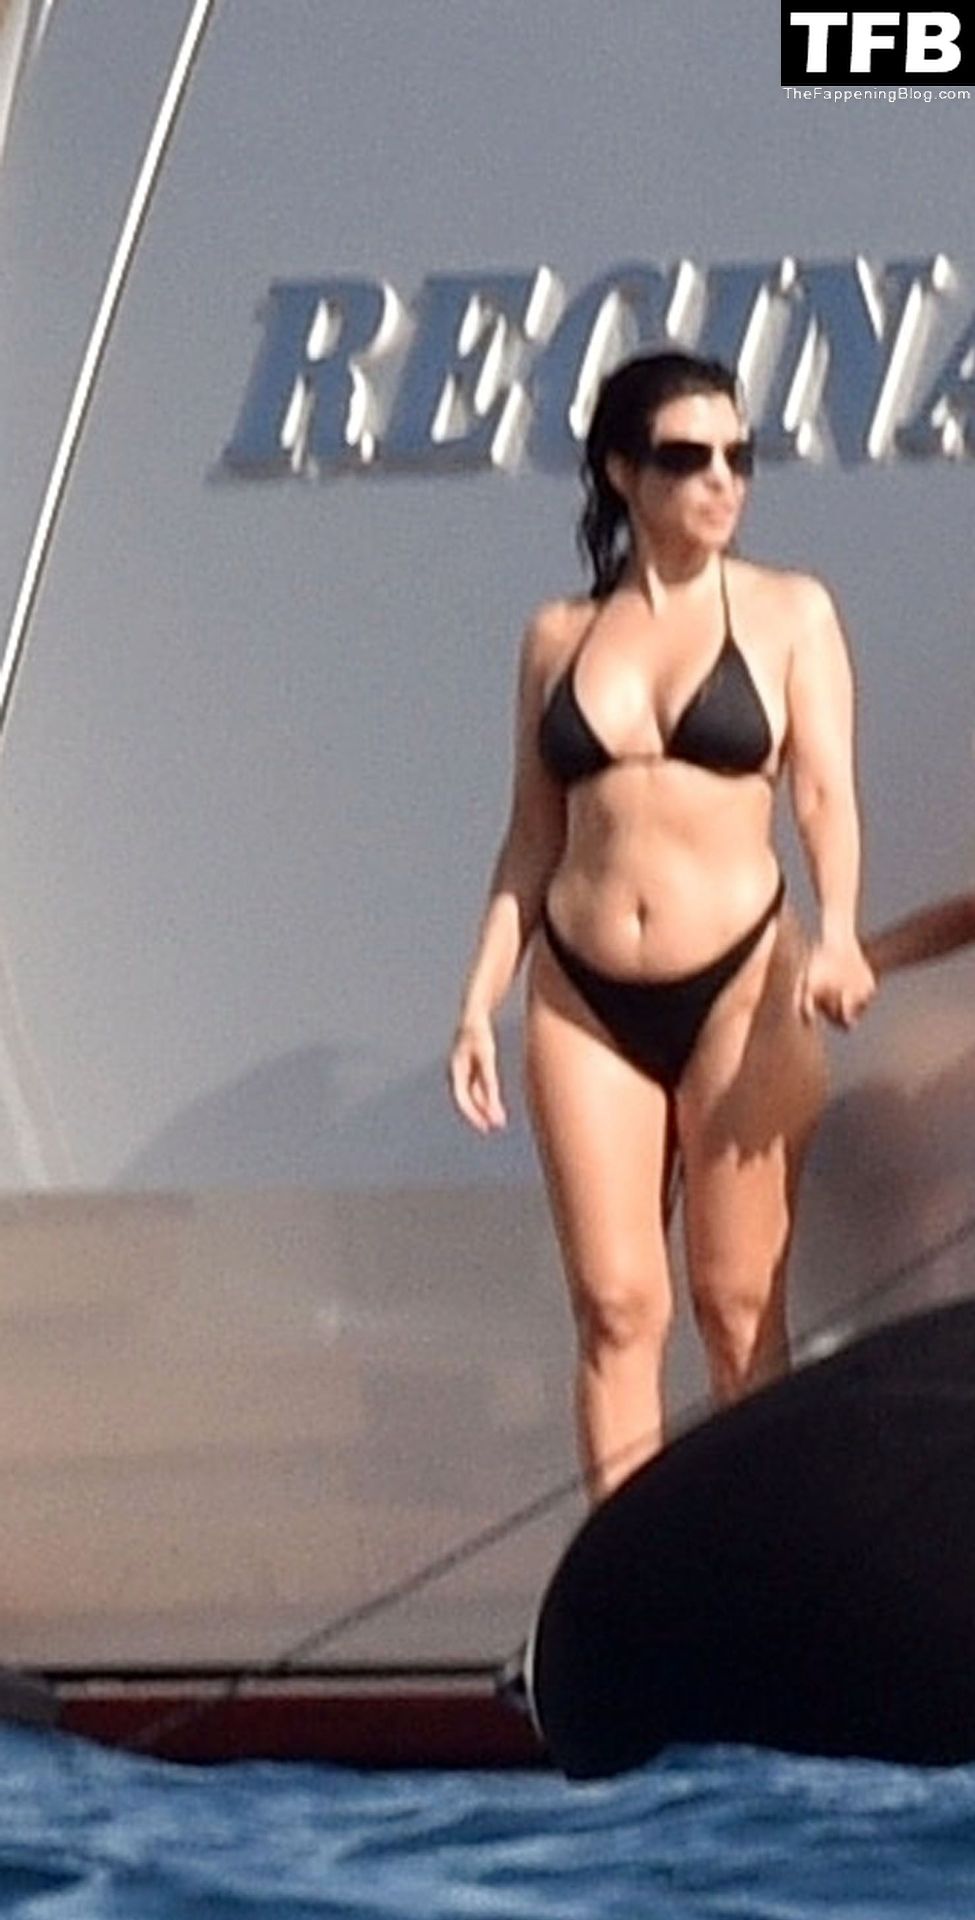 Kourtney Kardashian Sexy The Fappening Blog 25 1 - Kourtney Kardashian Shows Off Her Toned Bikini Body While Enjoying Some Quality Time with Travis Barker (48 Photos)